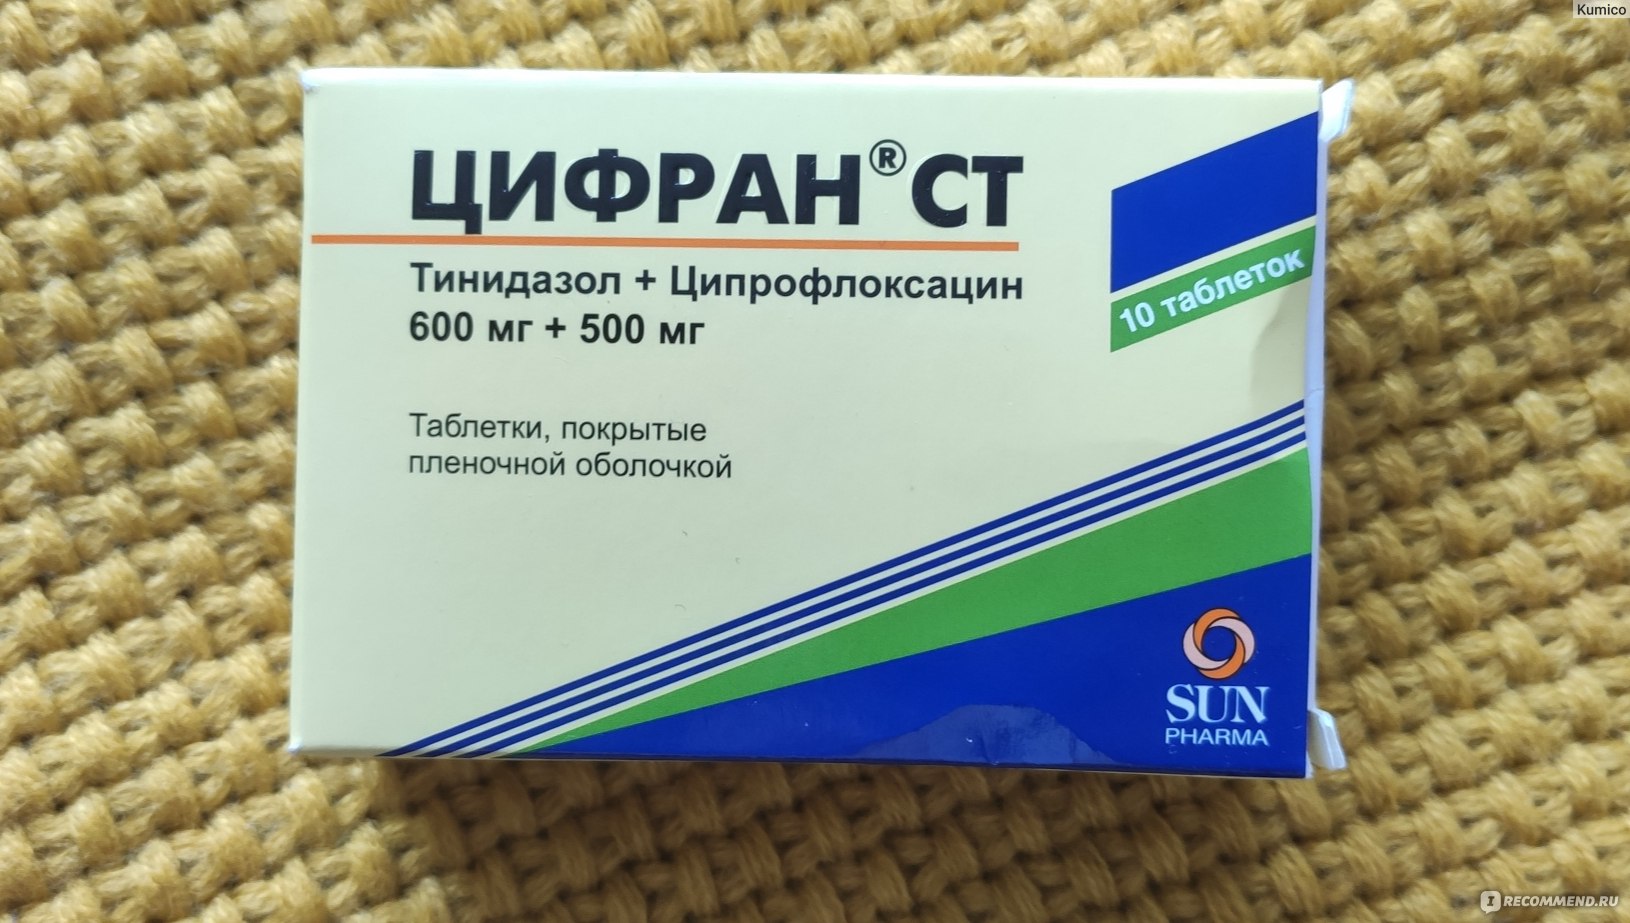 Антибиотик Sun Pharma Цифран СТ - «Цифран СТ - лечение в стоматологии и .